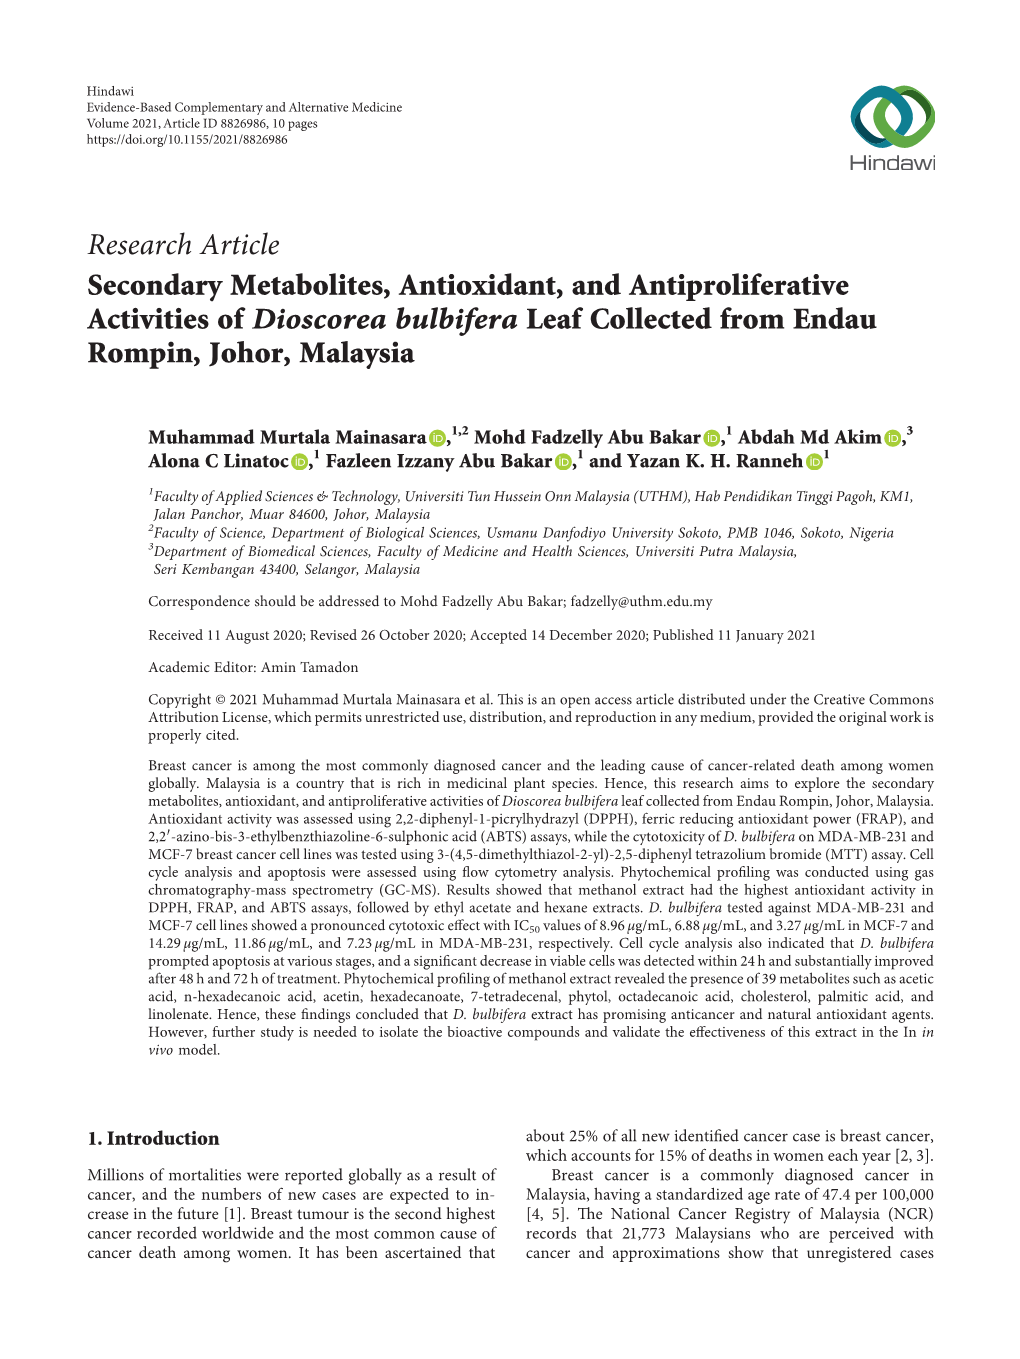 Secondary Metabolites, Antioxidant, and Antiproliferative Activities of Dioscorea Bulbifera Leaf Collected from Endau Rompin, Johor, Malaysia